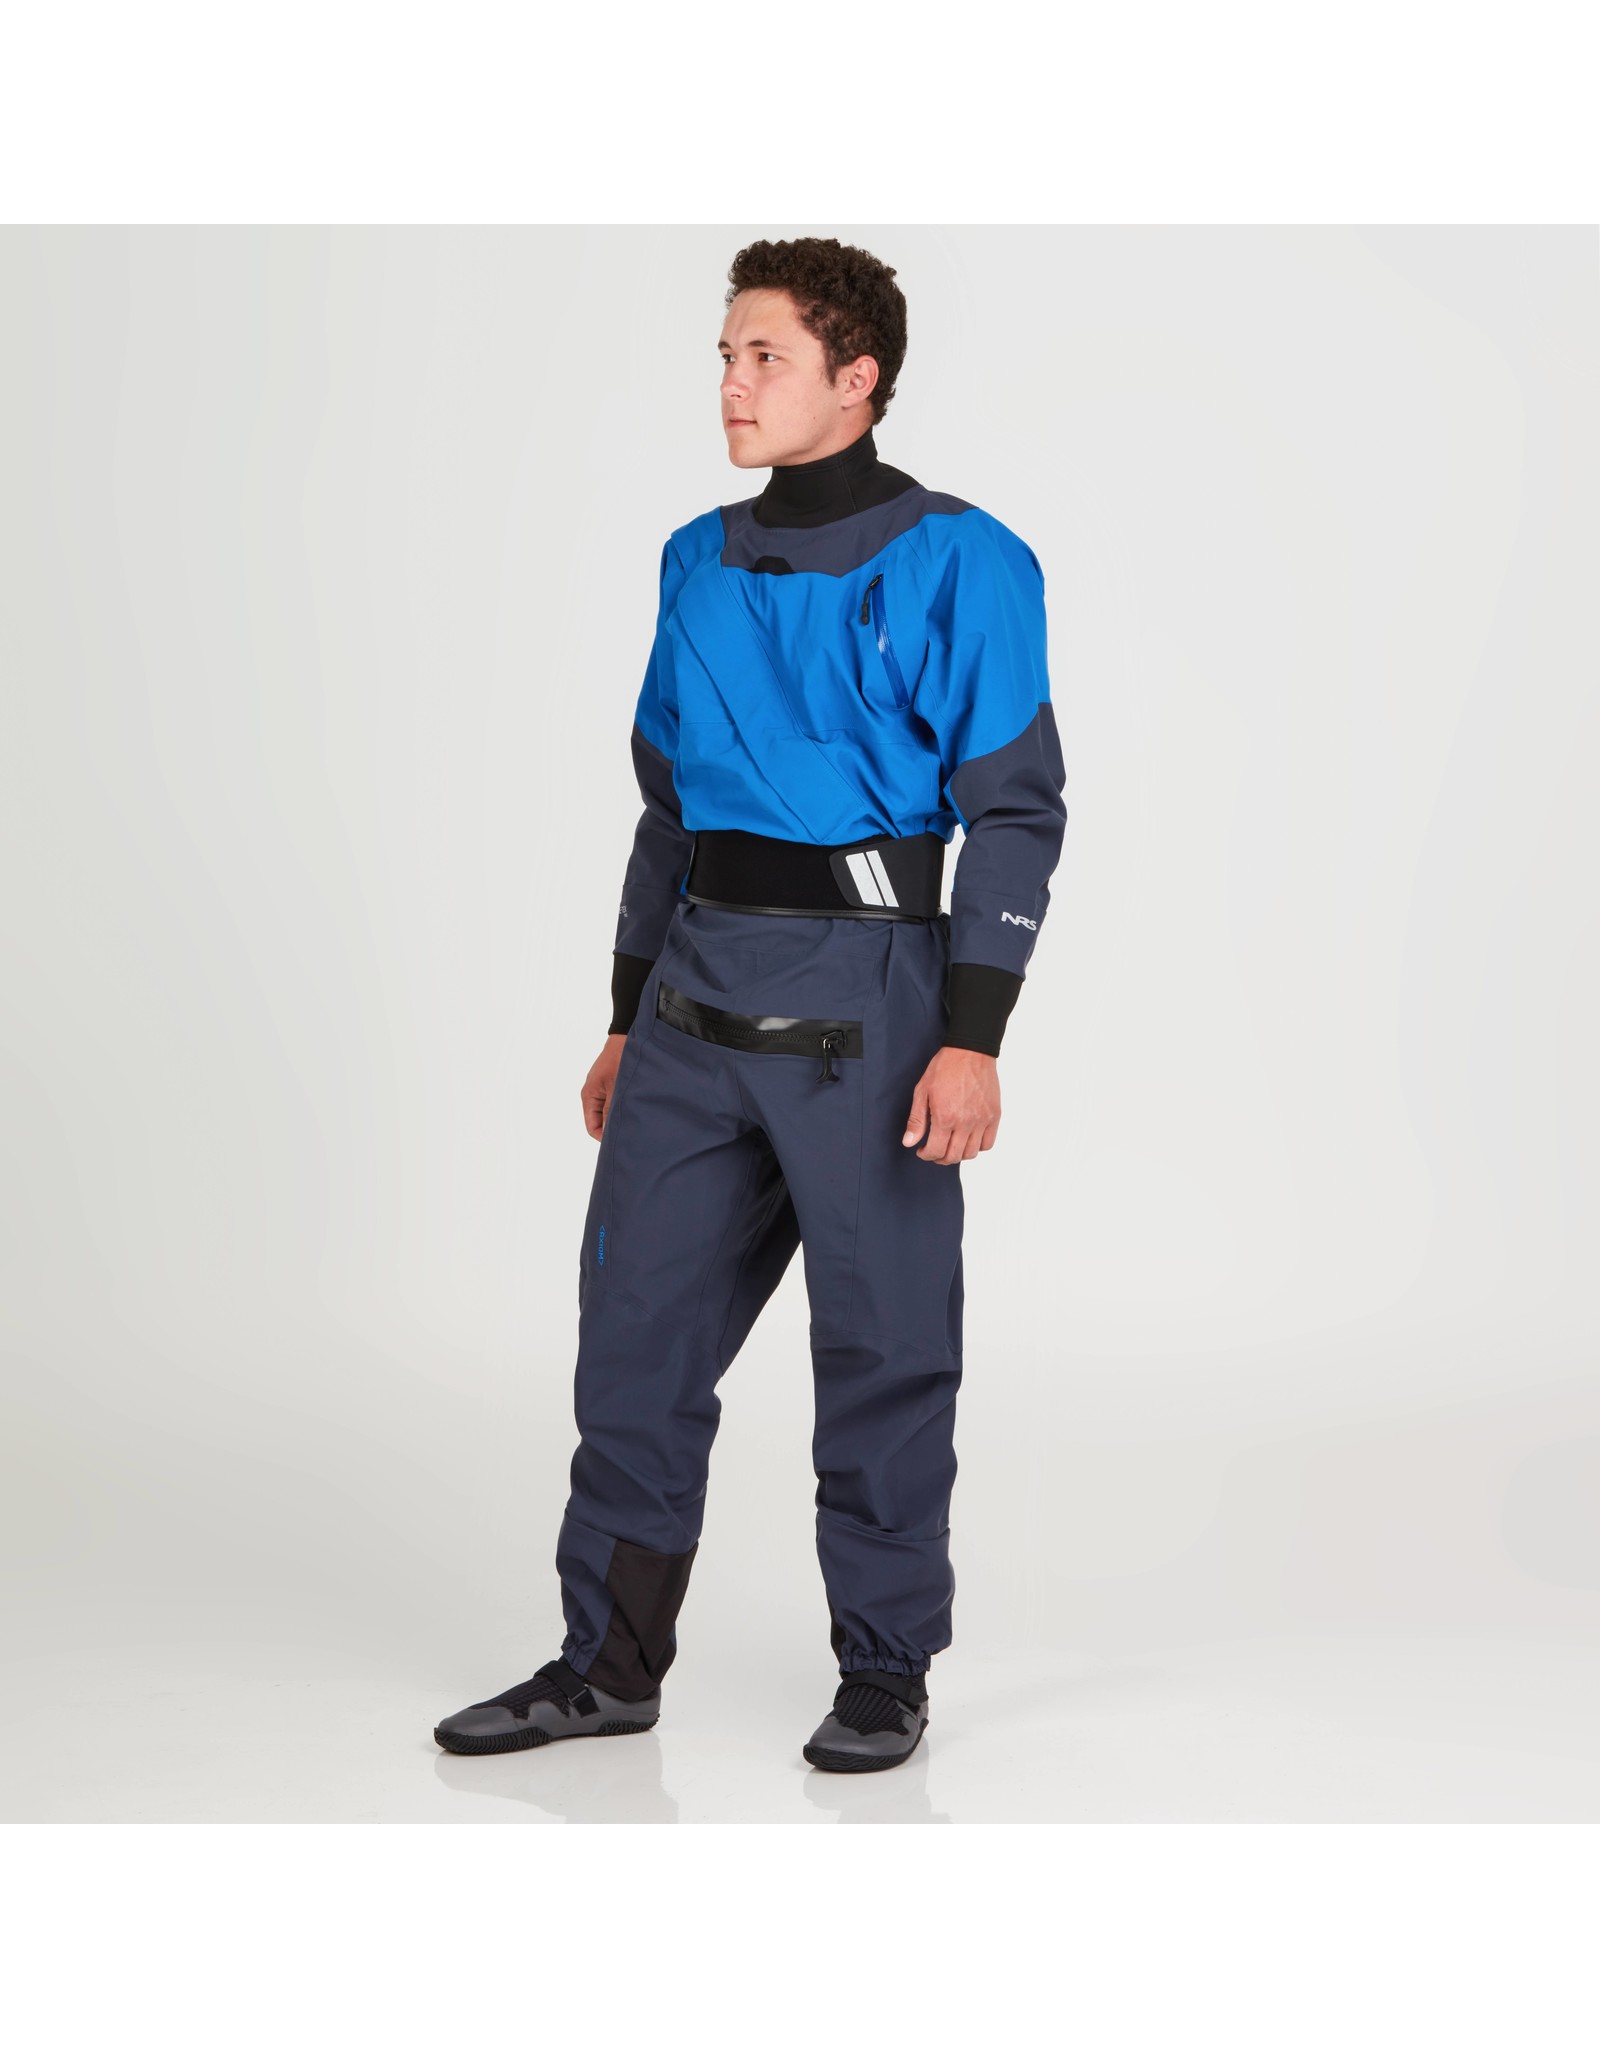 NRS NRS Men's Axiom GORE-TEX Pro Dry Suit